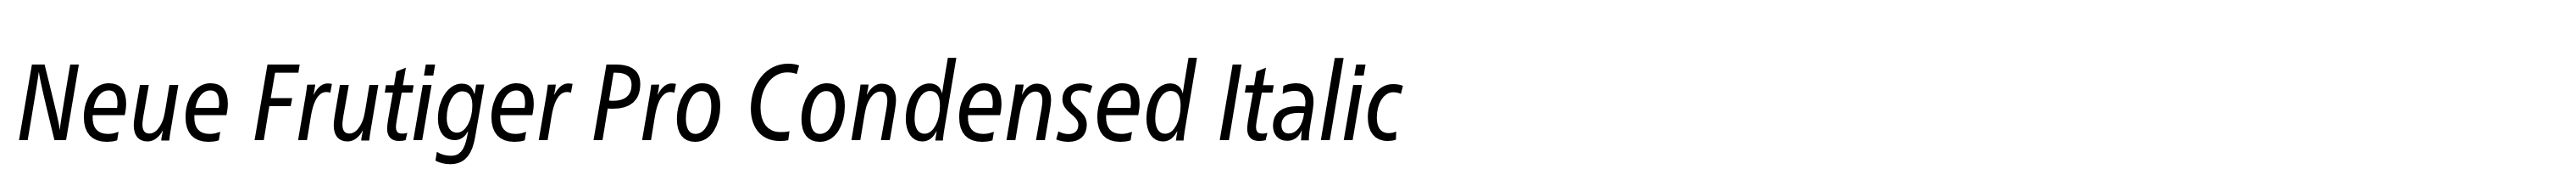 Neue Frutiger Pro Condensed Italic